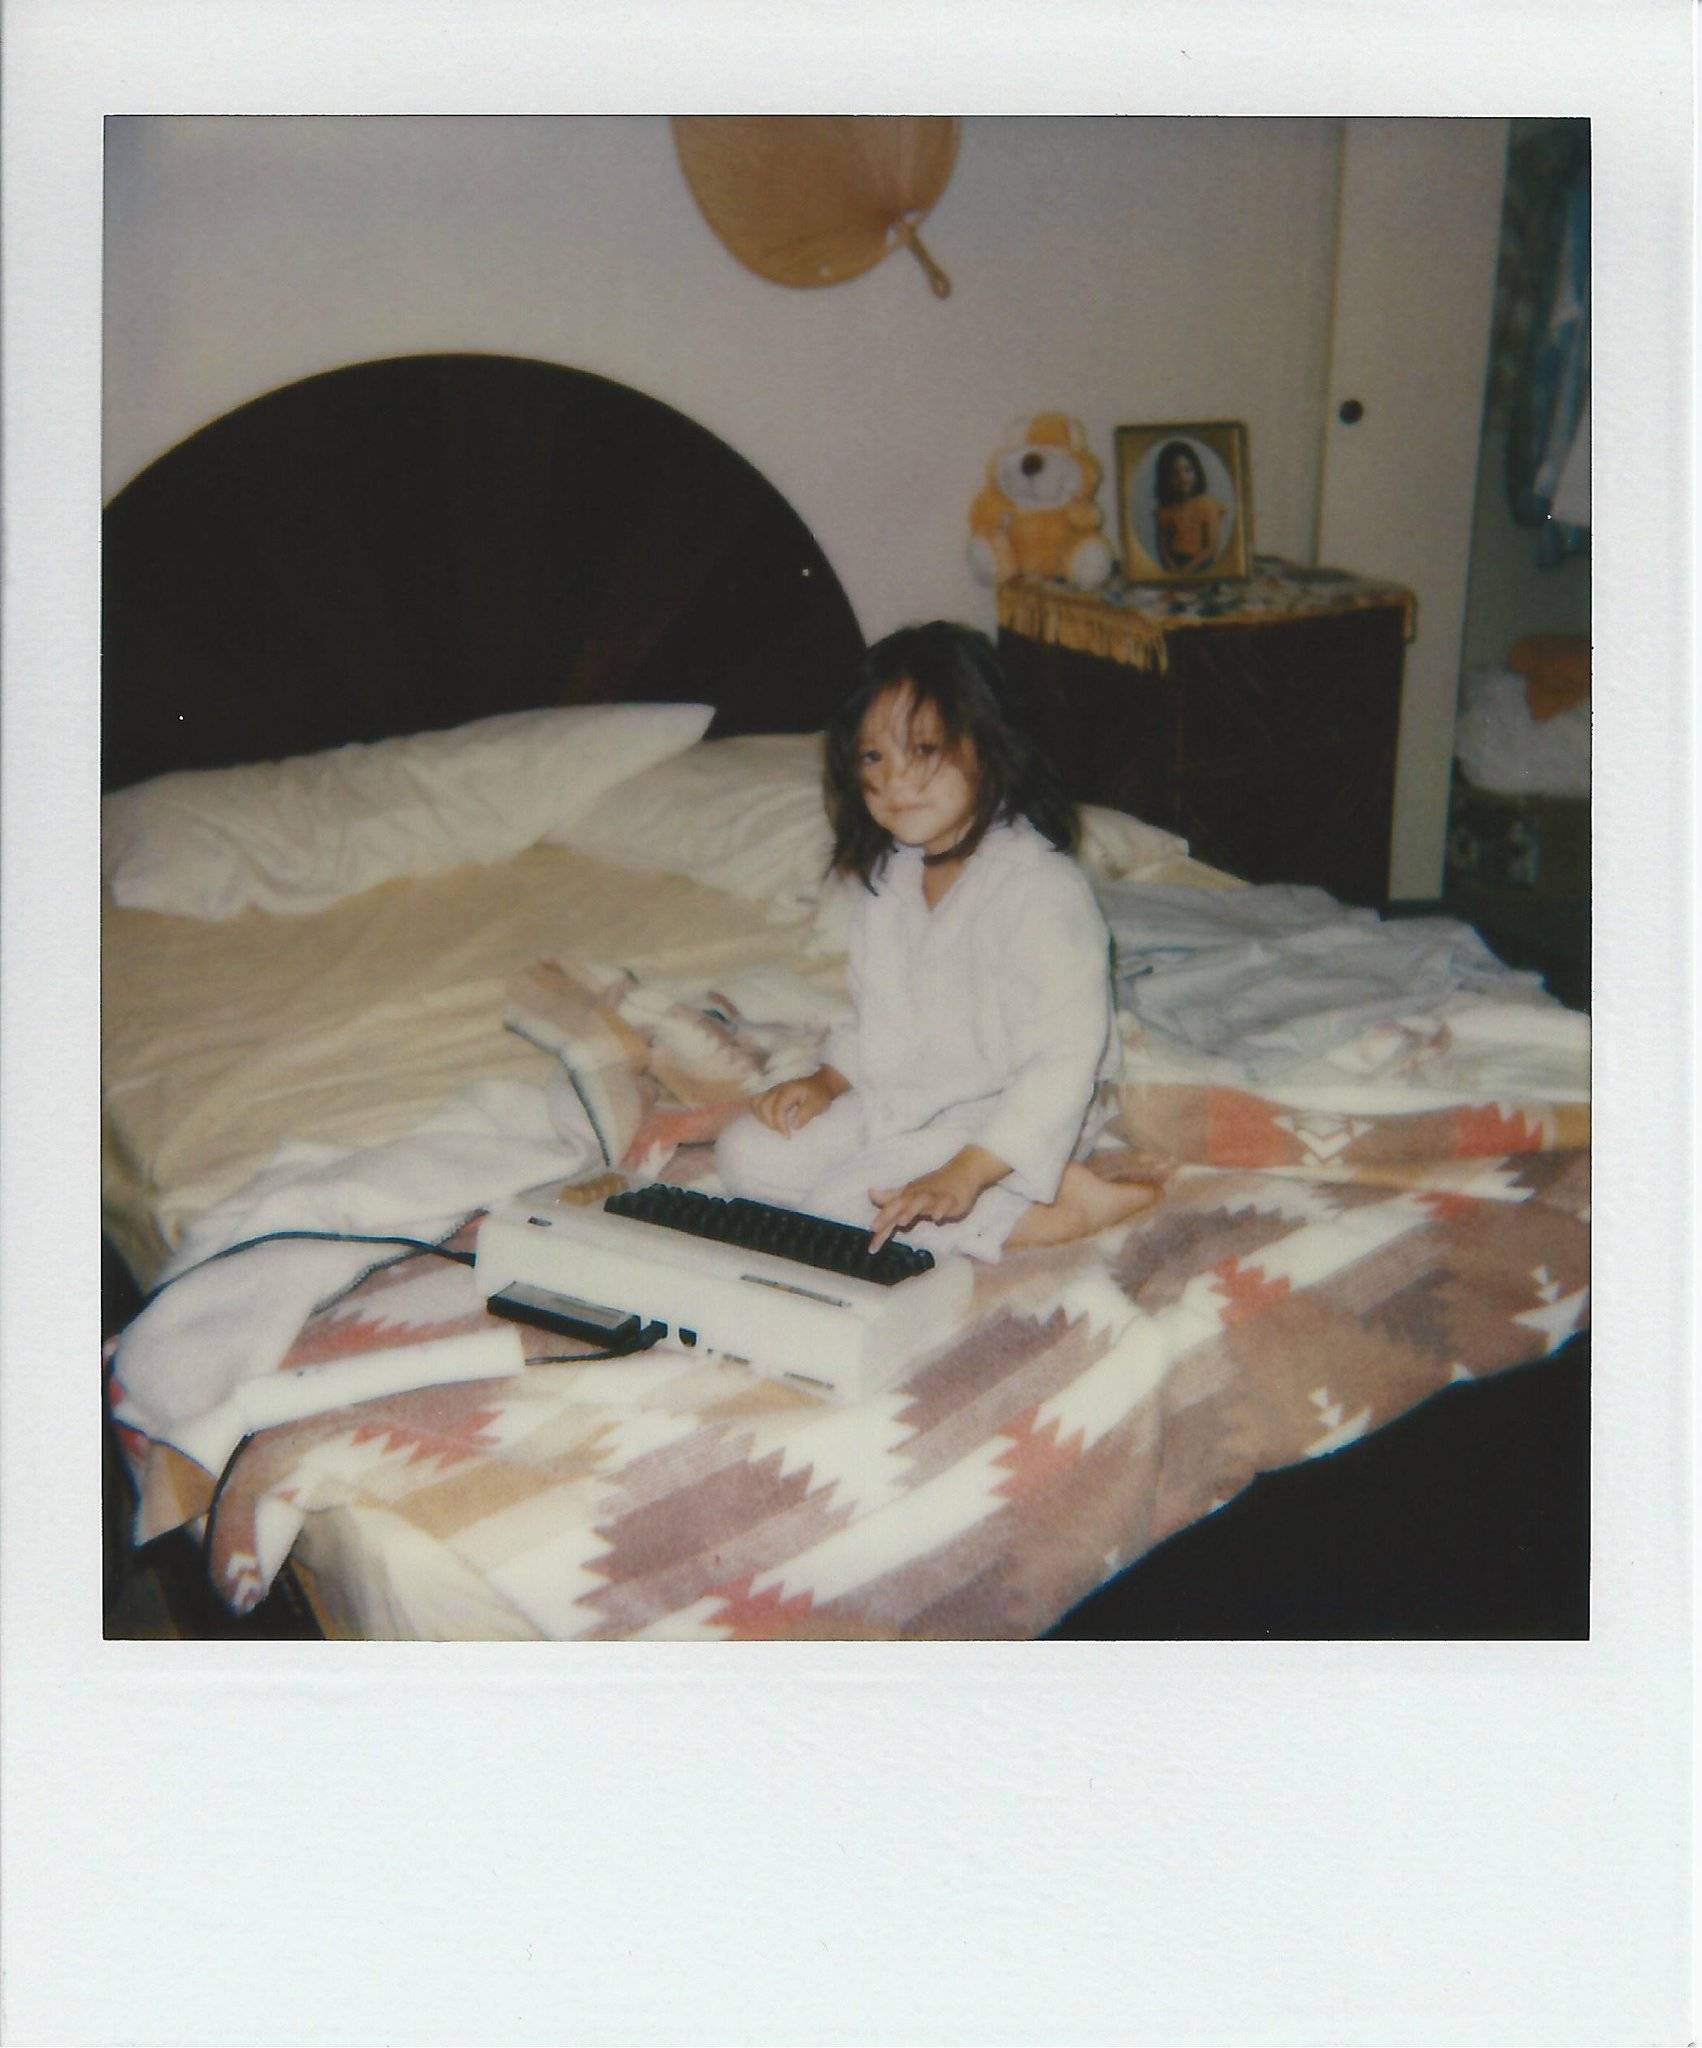 Doreen with a Nintendo as a child